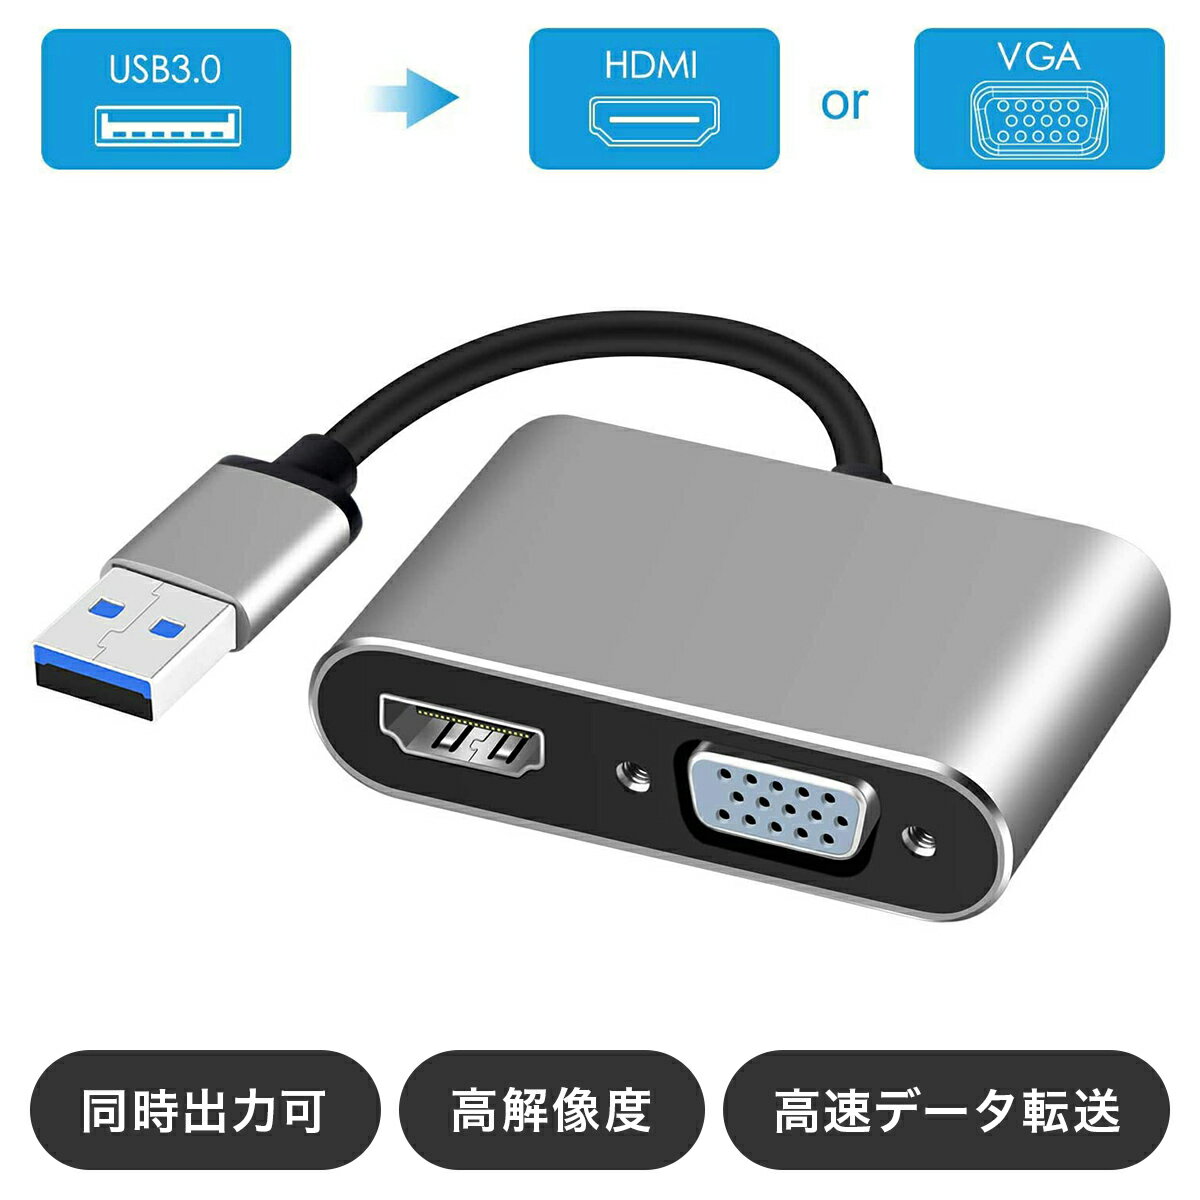 USB hdmi VGA 変換 HDMI VGA 同時出力 高解像度 1080p USB 3.0 to HDMI VGA 変換 アダプタ ケーブル アダプター アダプターケーブル 変換アダプター 変換ケーブル windows 7 8 10 対応 Mac非対応！ Ewise